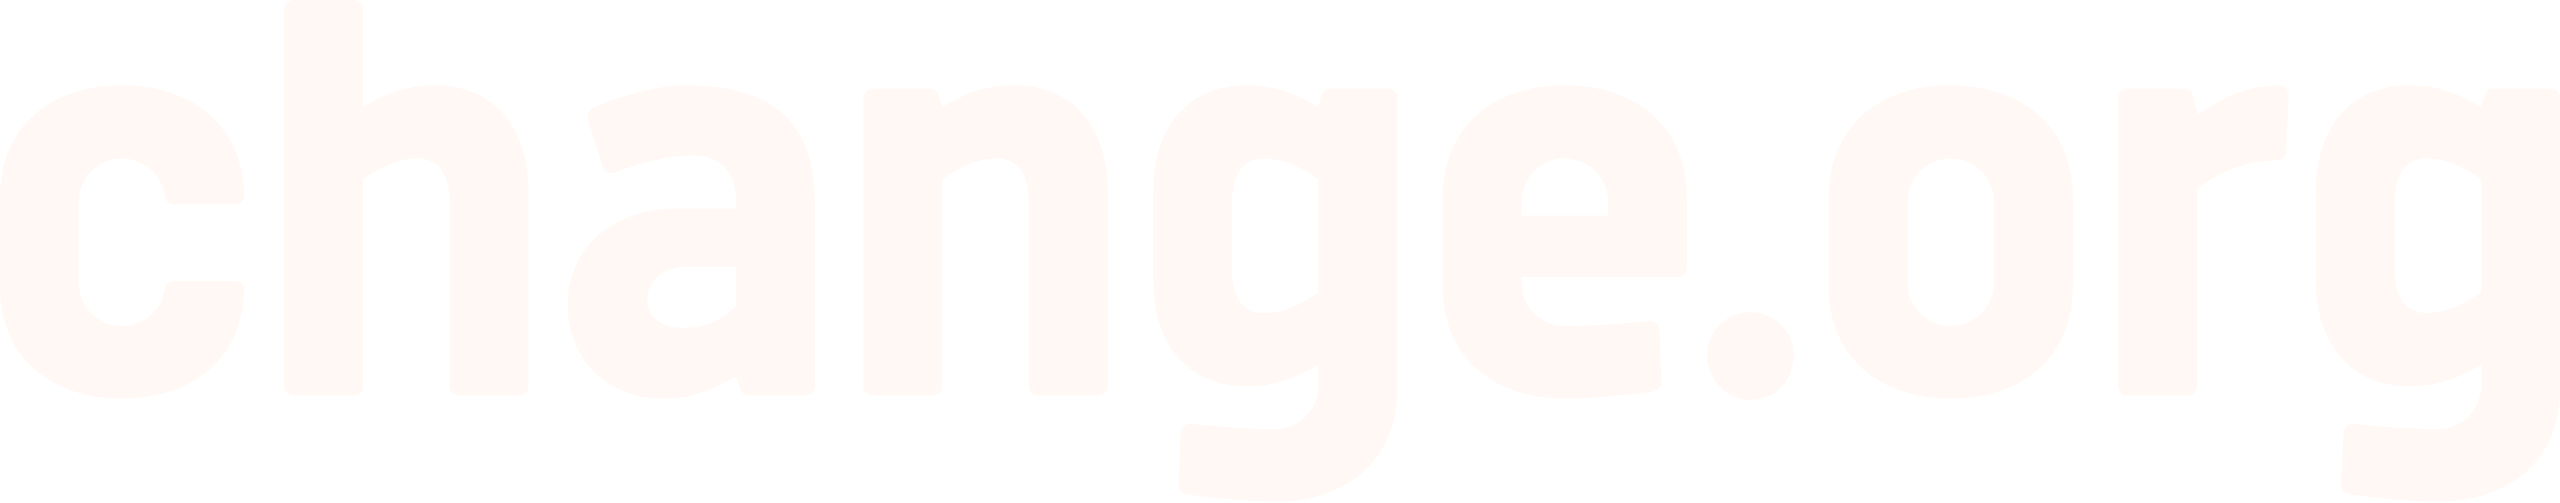 Change.org_logo 1-1